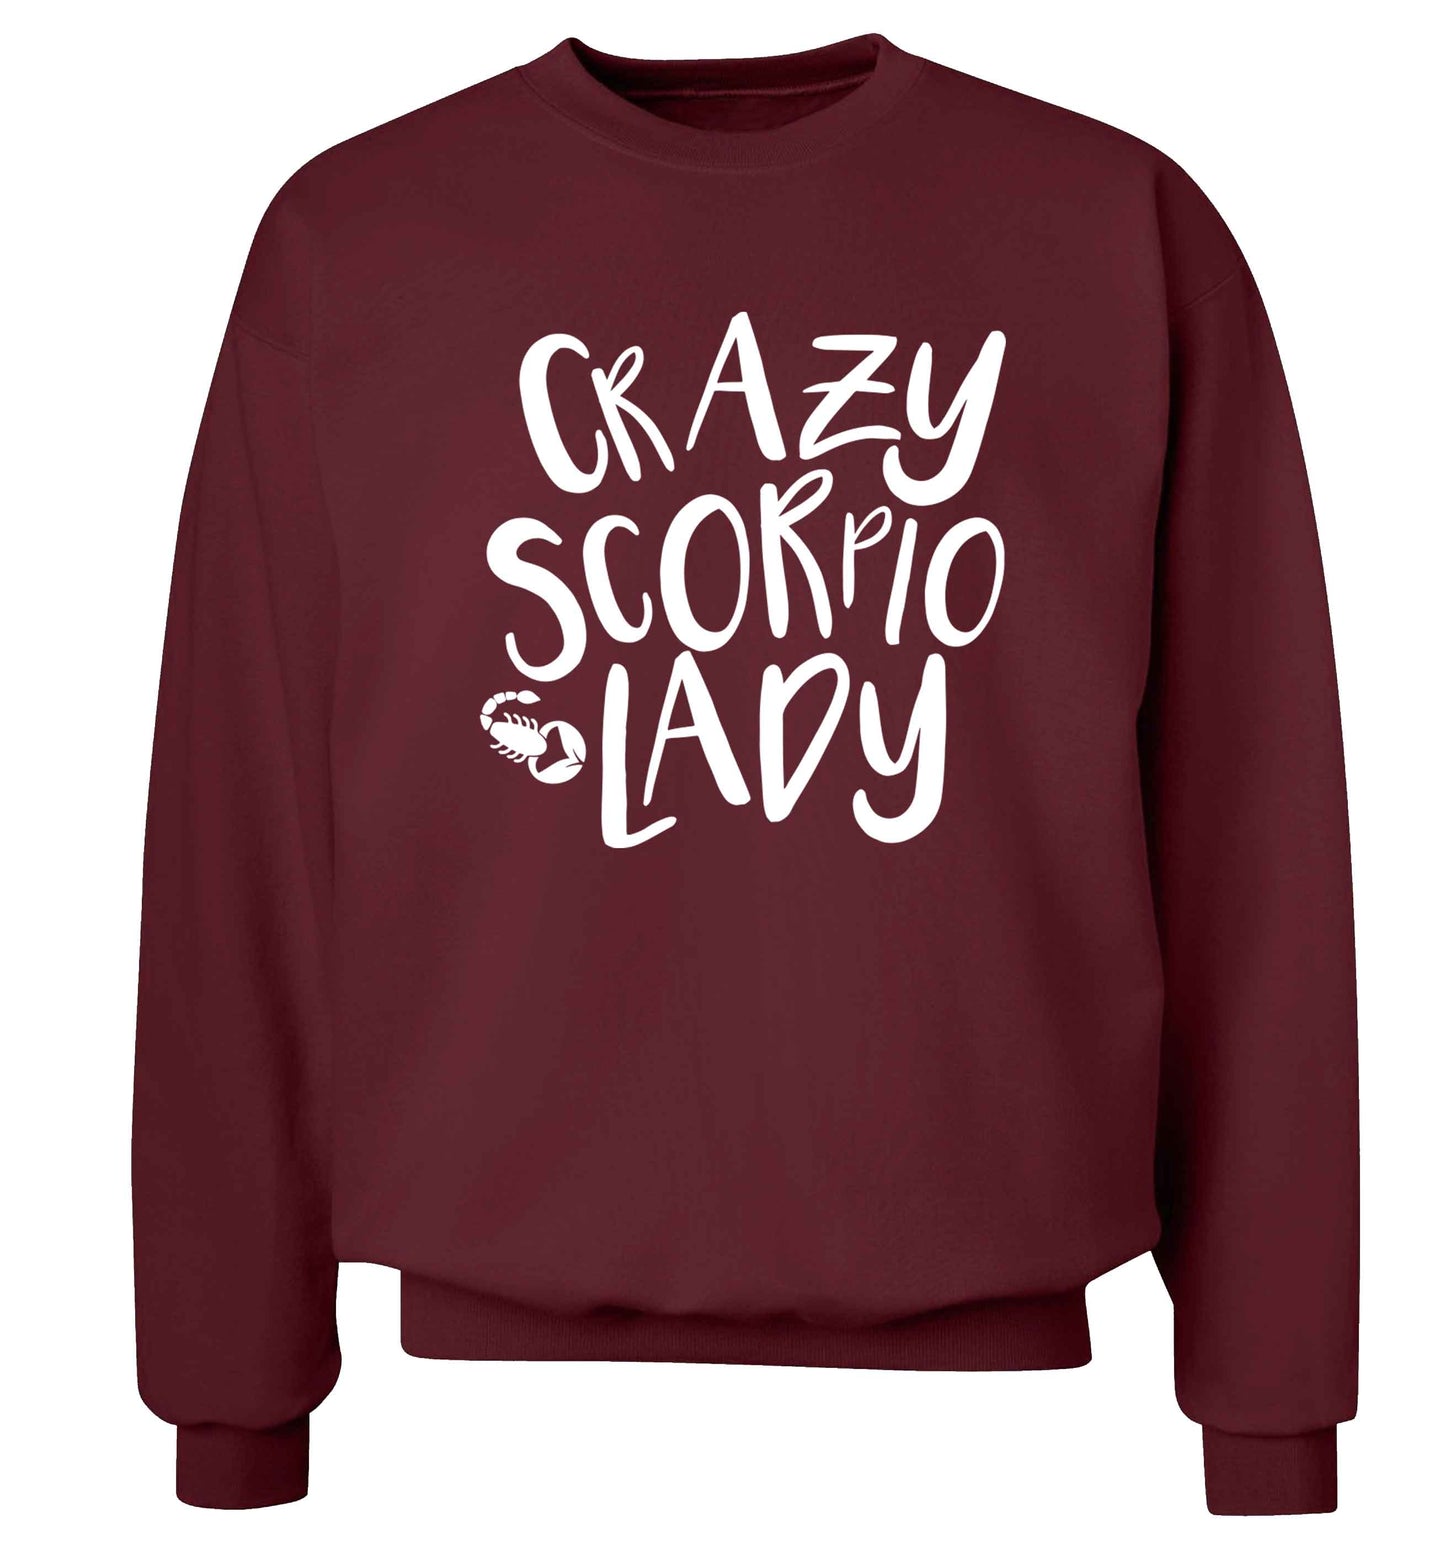 Crazy scorpio lady Adult's unisex maroon Sweater 2XL